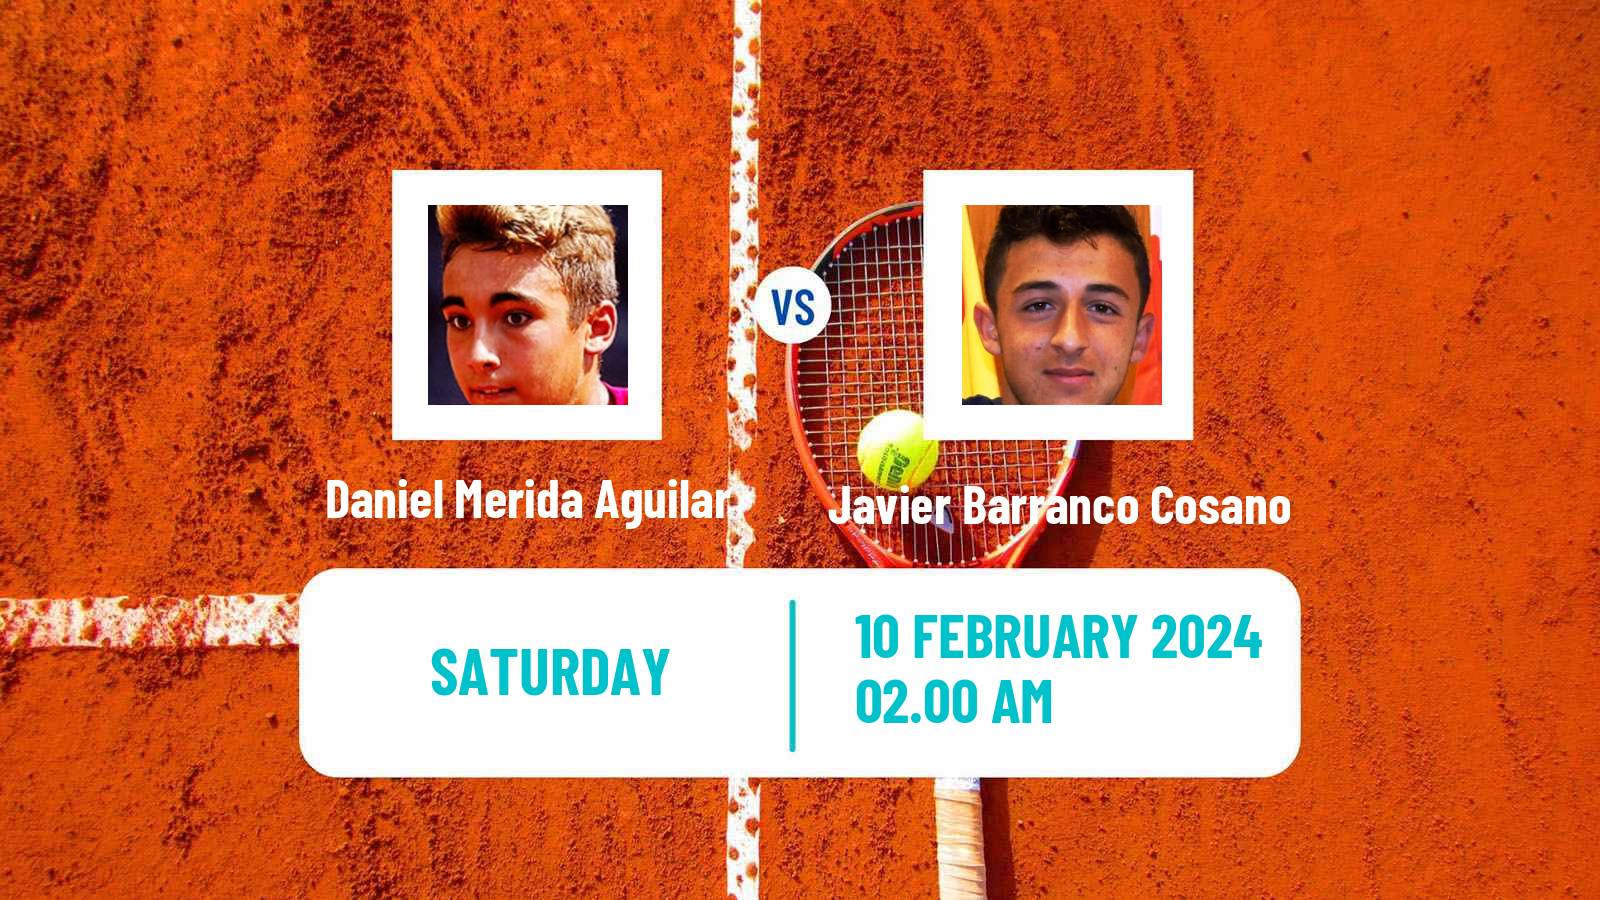 Tennis ITF M25 Antalya 2 Men Daniel Merida Aguilar - Javier Barranco Cosano